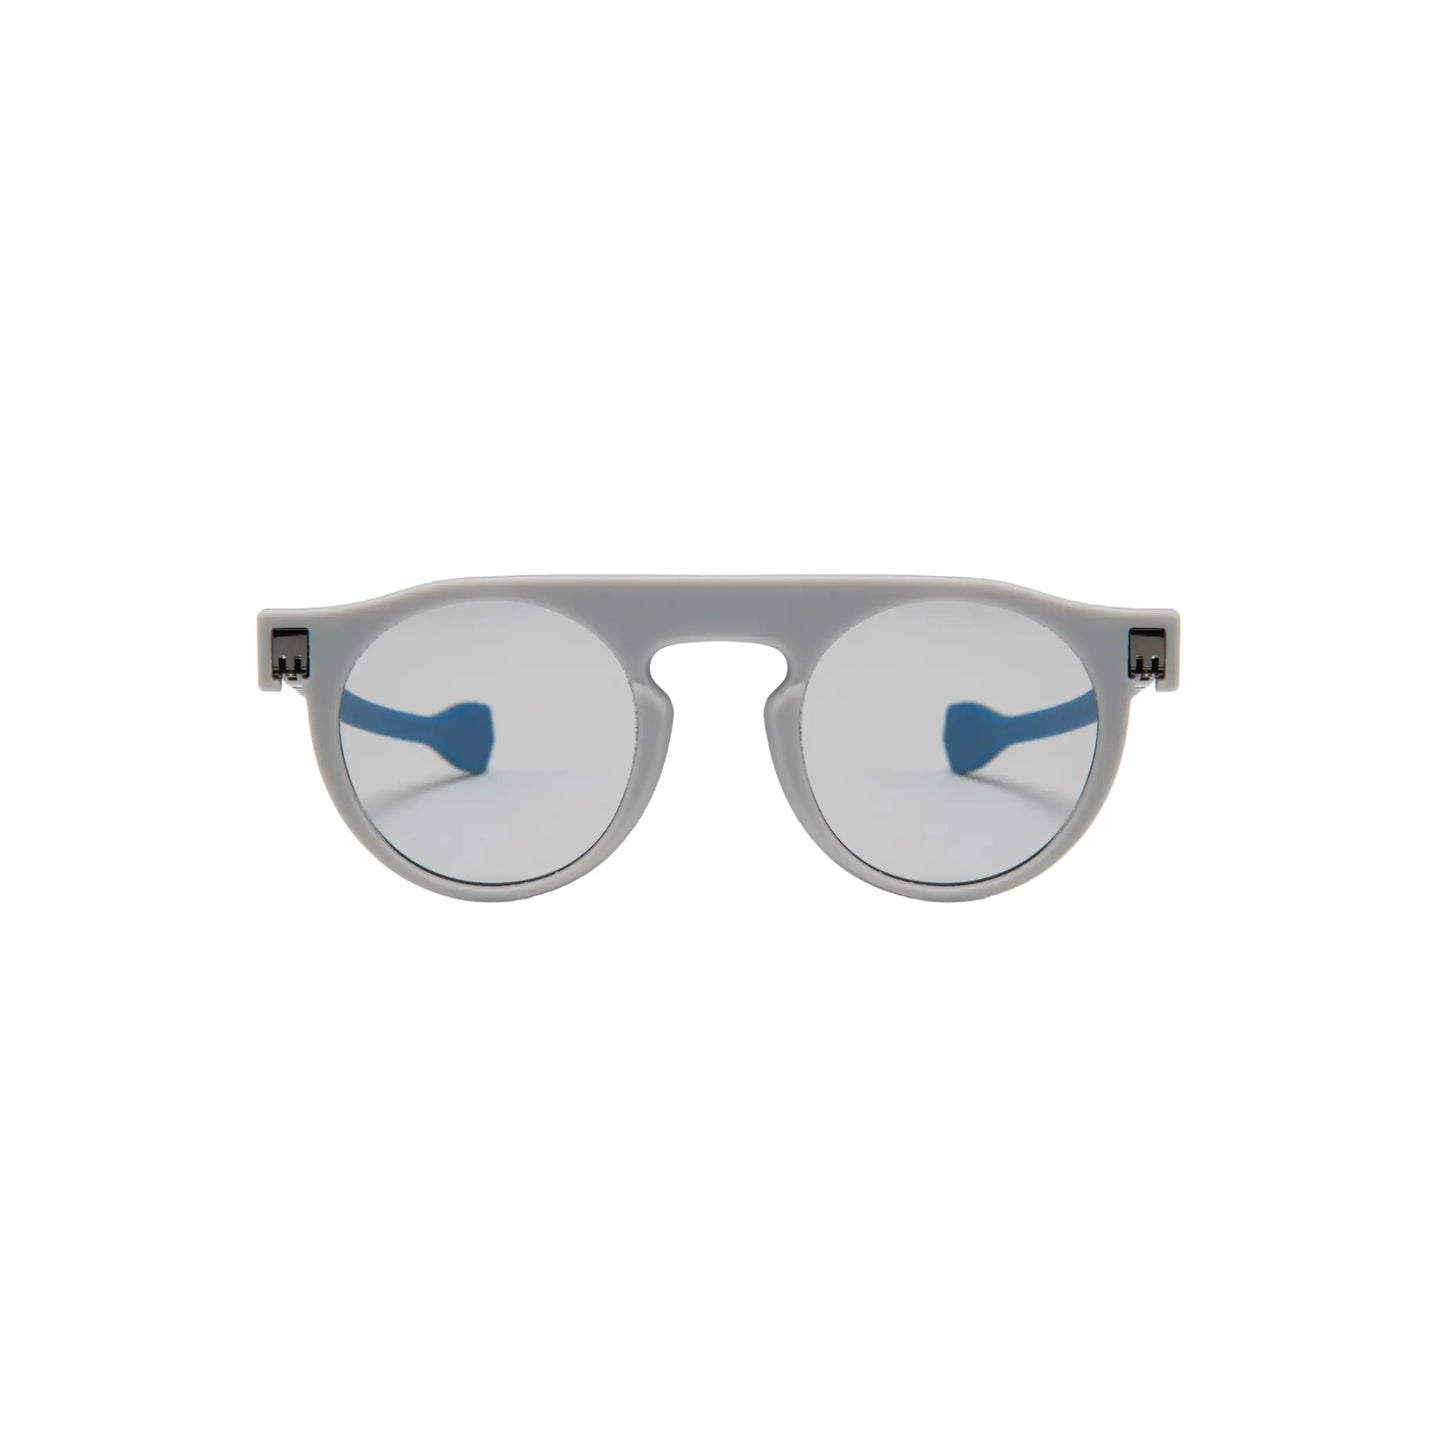 Reverso sunglasses black/grey & blue reversible & ultra light front view 1